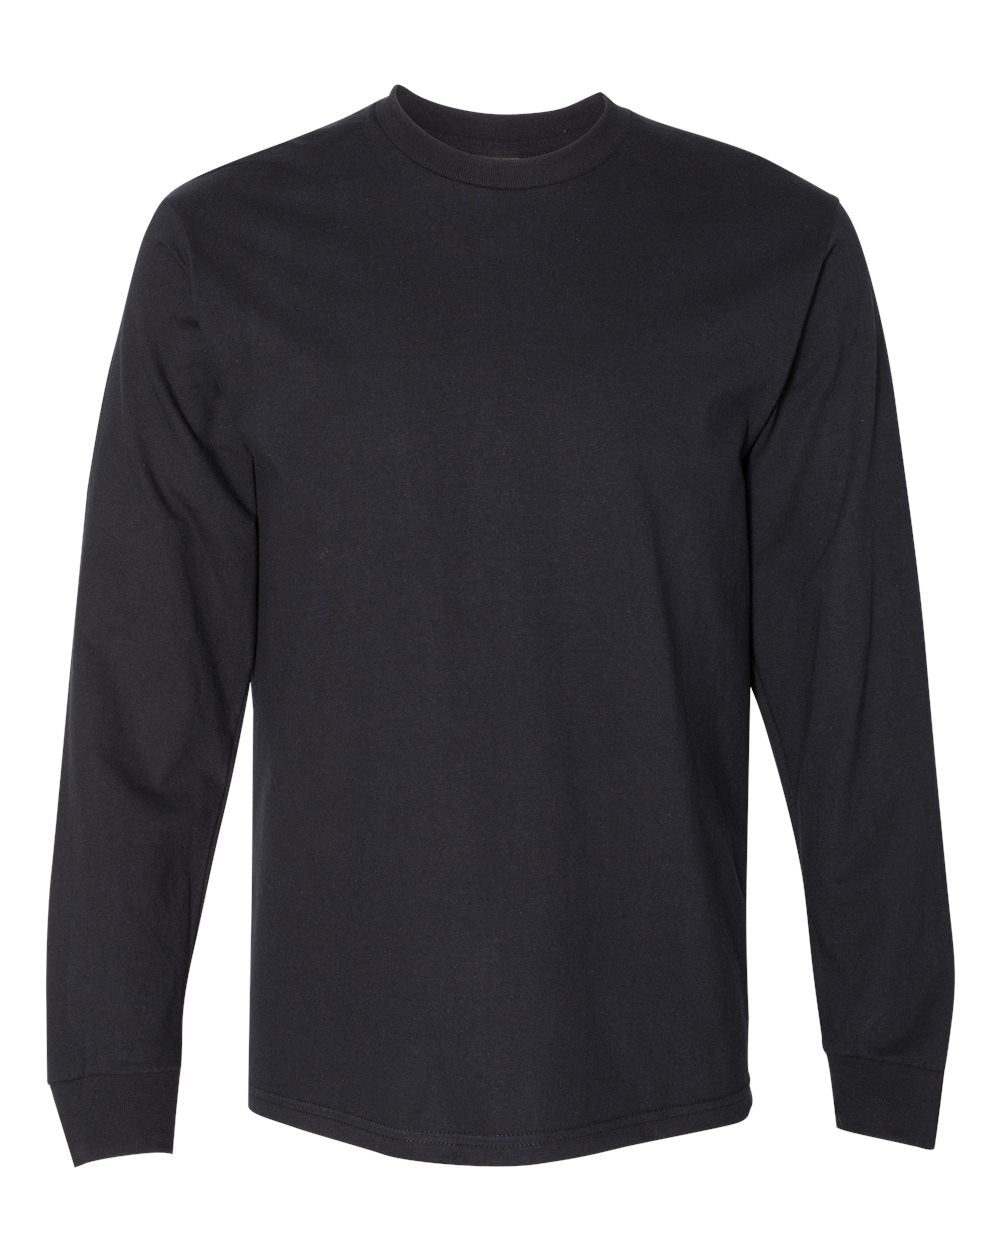 custom apparel gildan hammer long sleeve tee shirt pullover in multiple sizes and colors